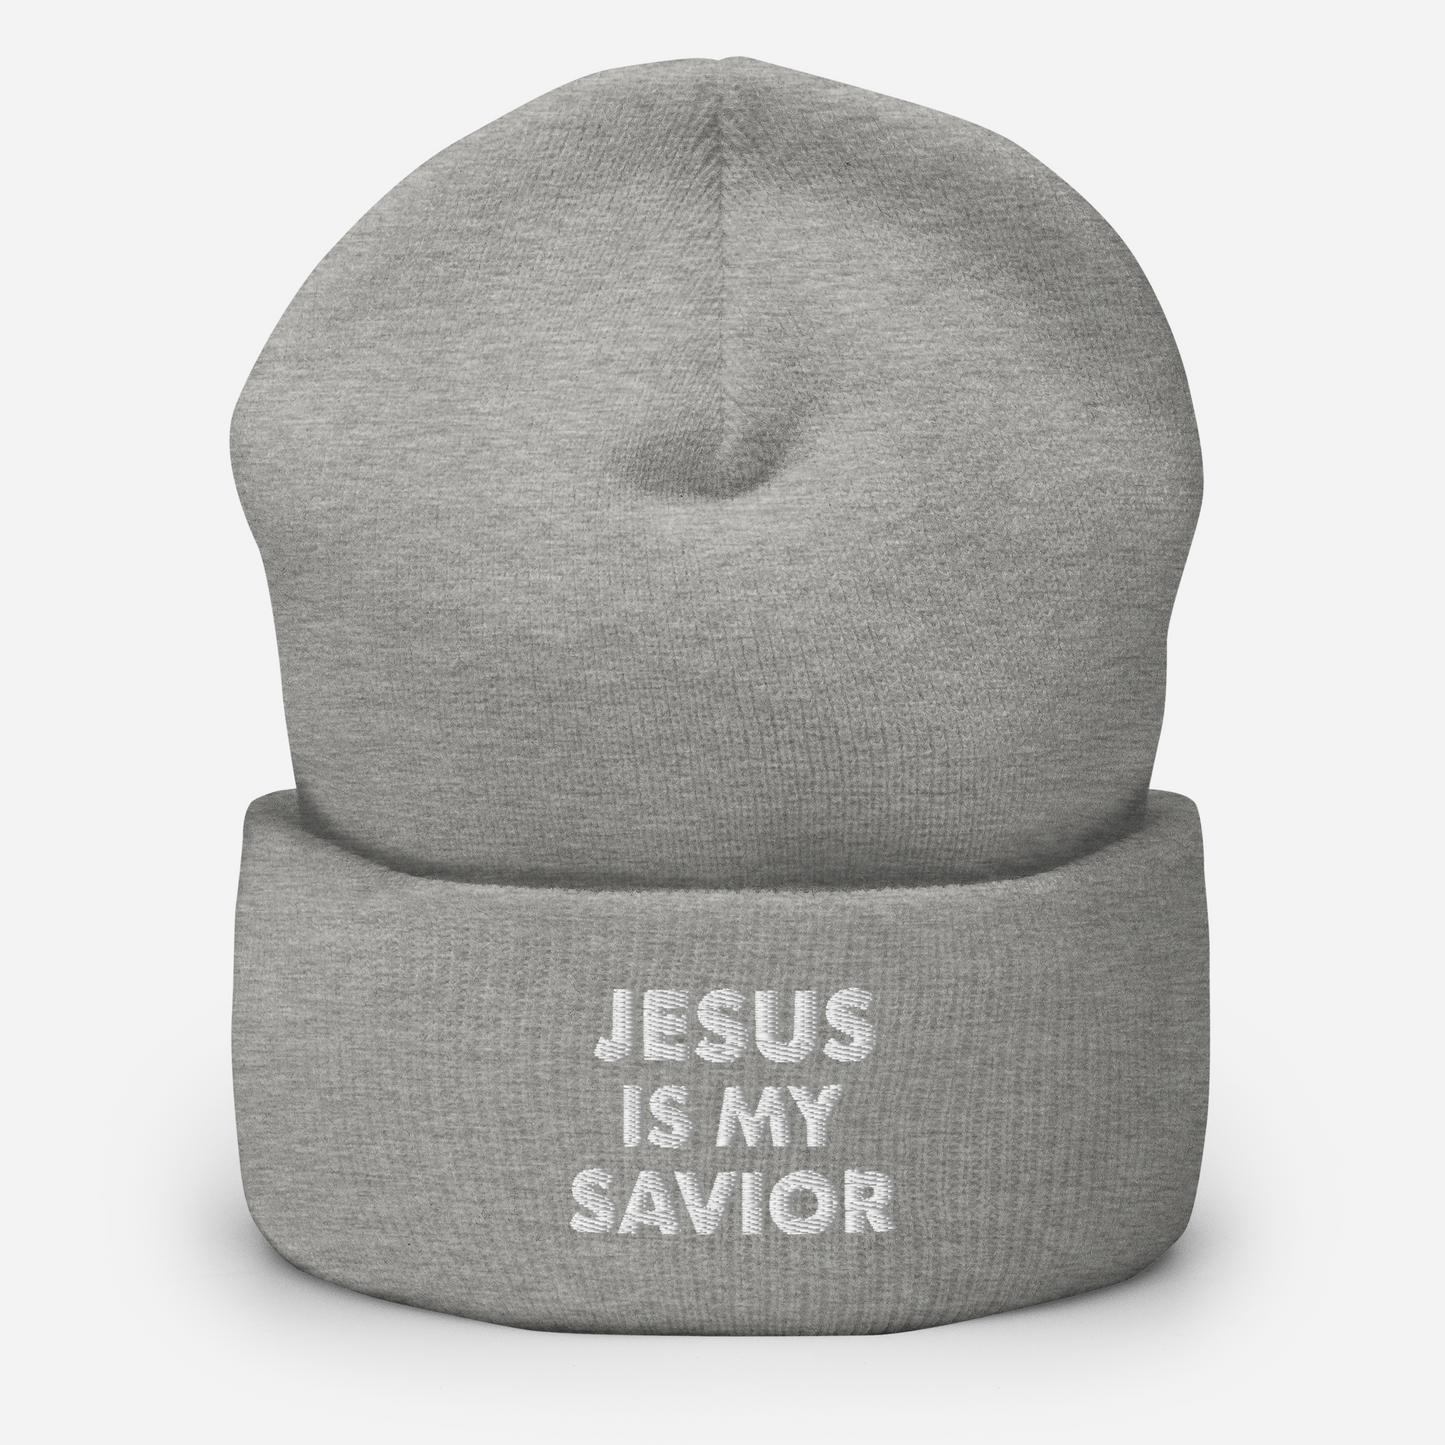 Jesus is my Savior - Cuffed Beanie